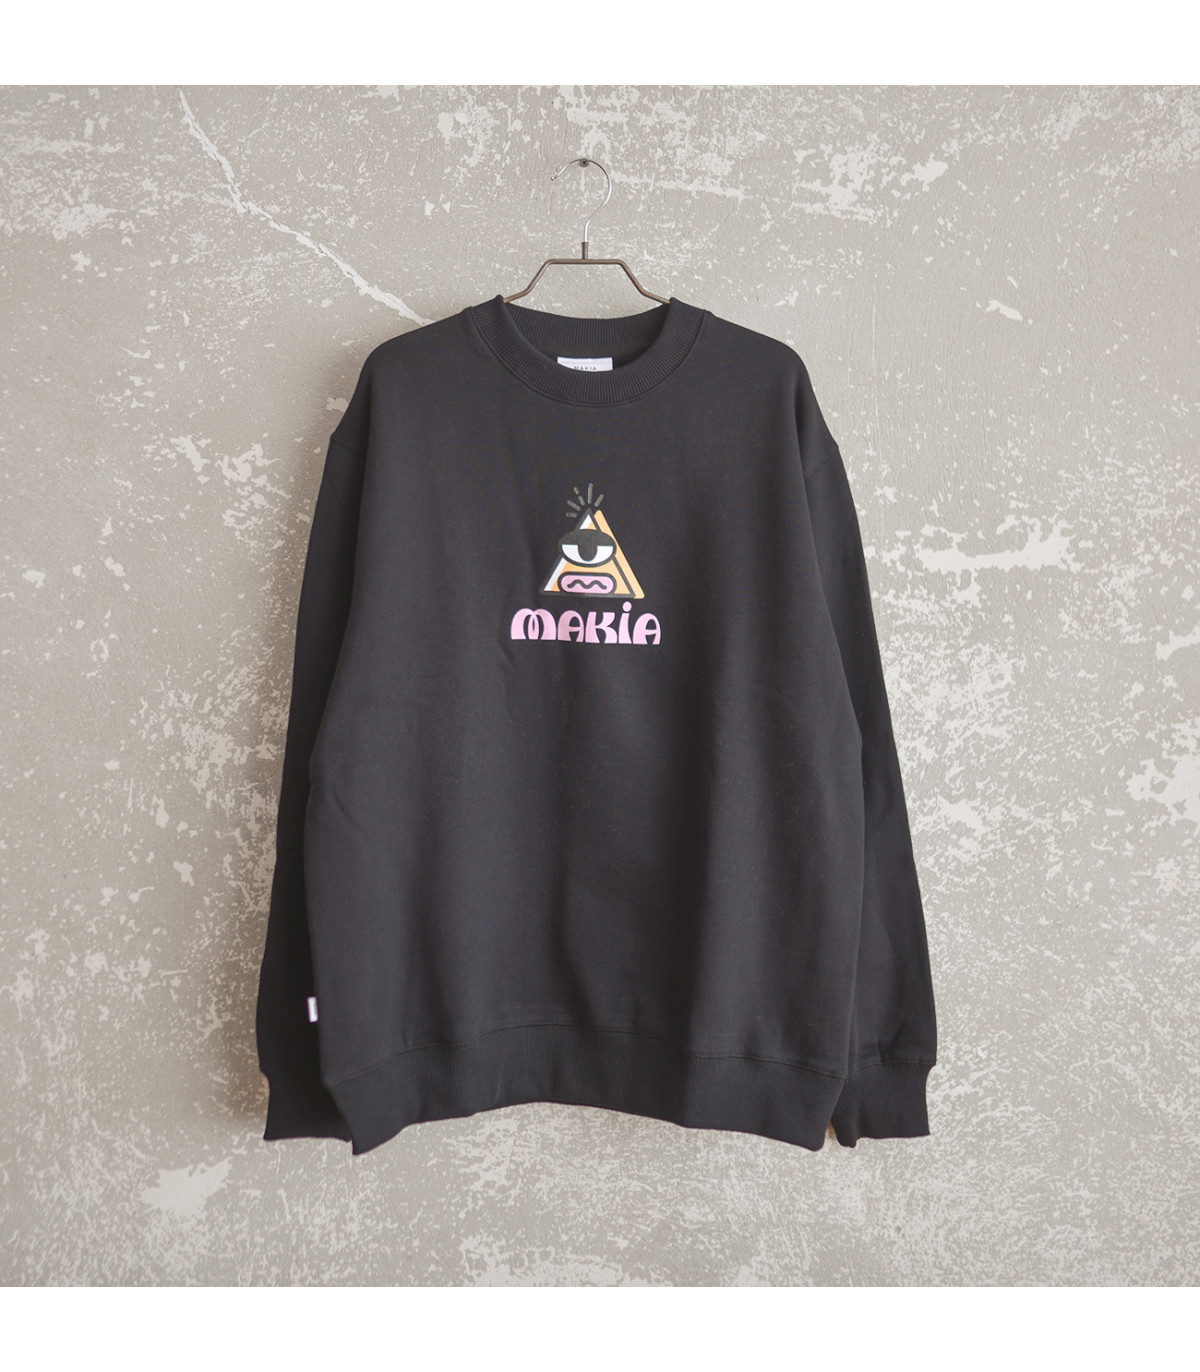 Iluminati Sweatshirt